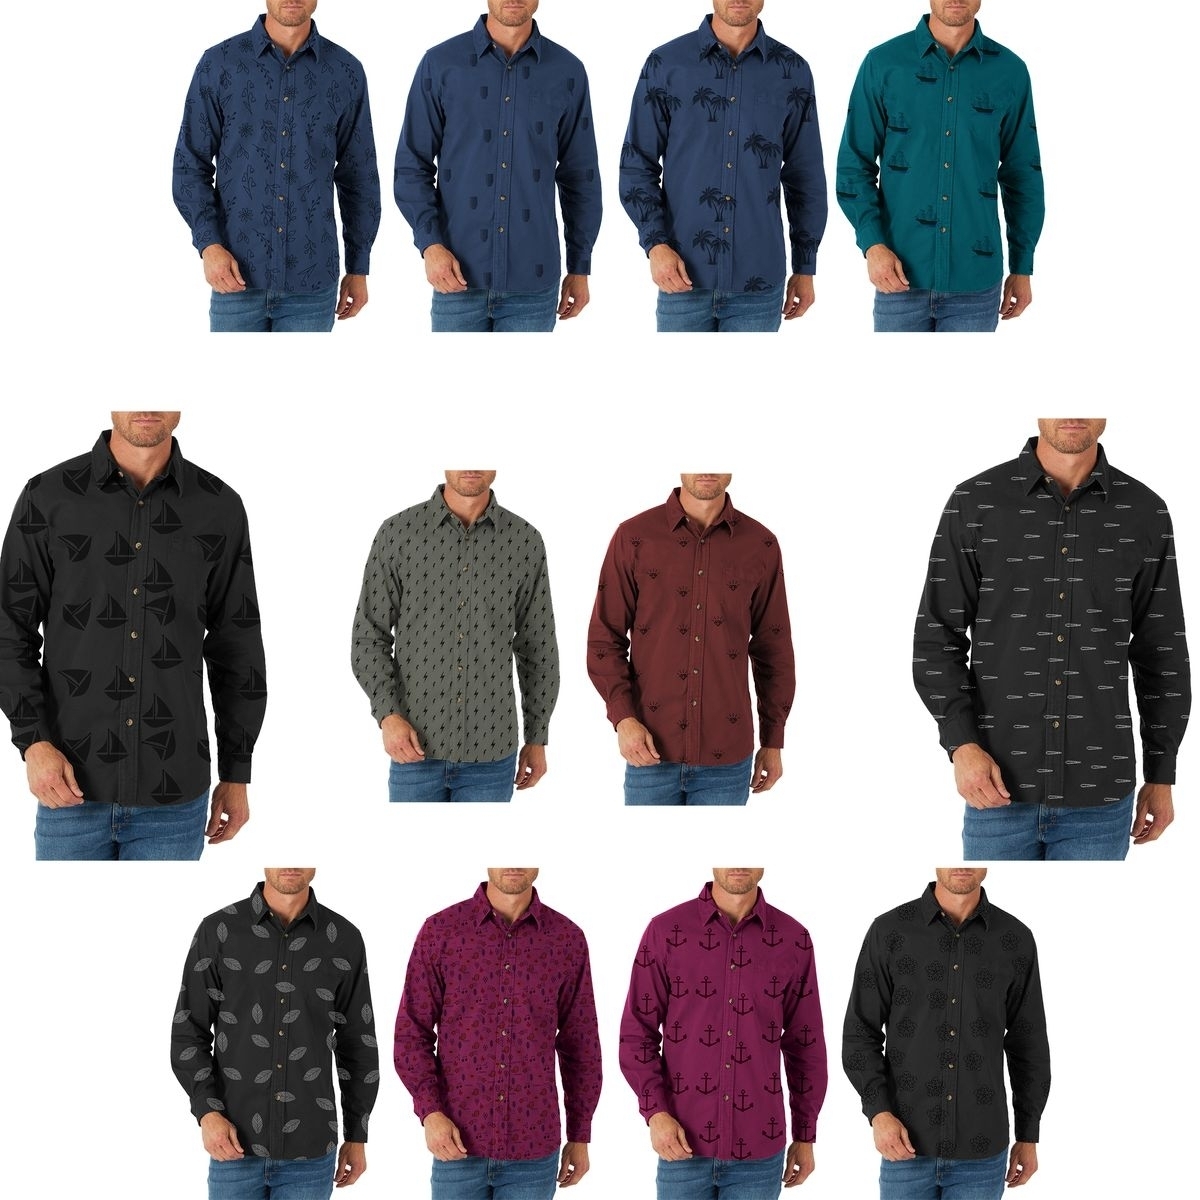 3-Pack: Men's Formal Classic Slim Fit Button Down Long Sleeve Printed Dress Shirt - Medium